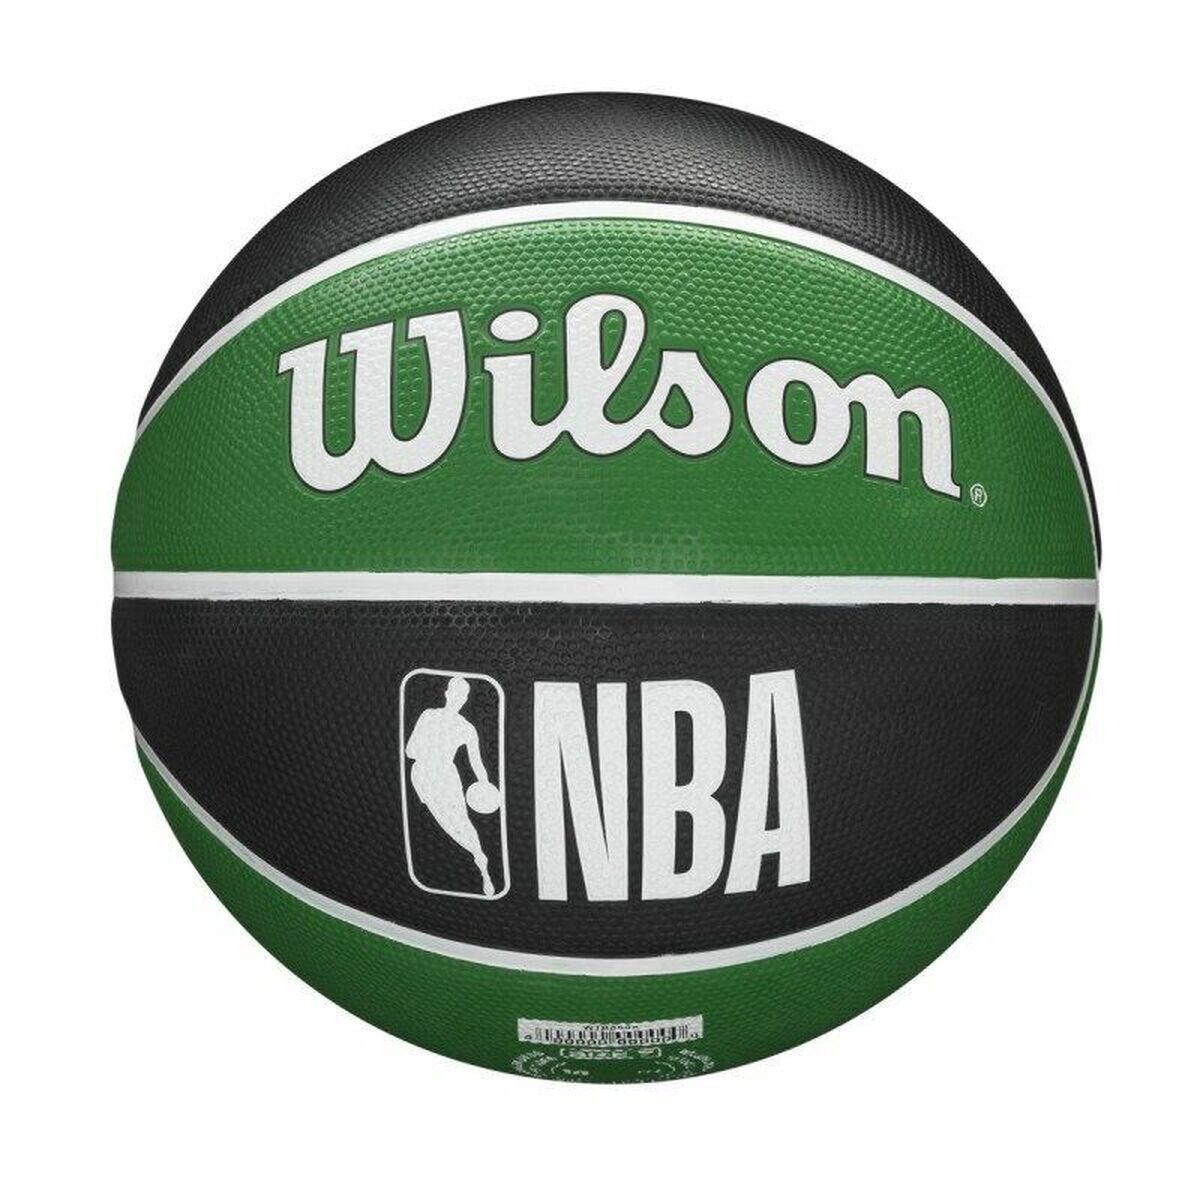 Basketball Ball Wilson Nba Team Tribute Boston Celtics Green One size